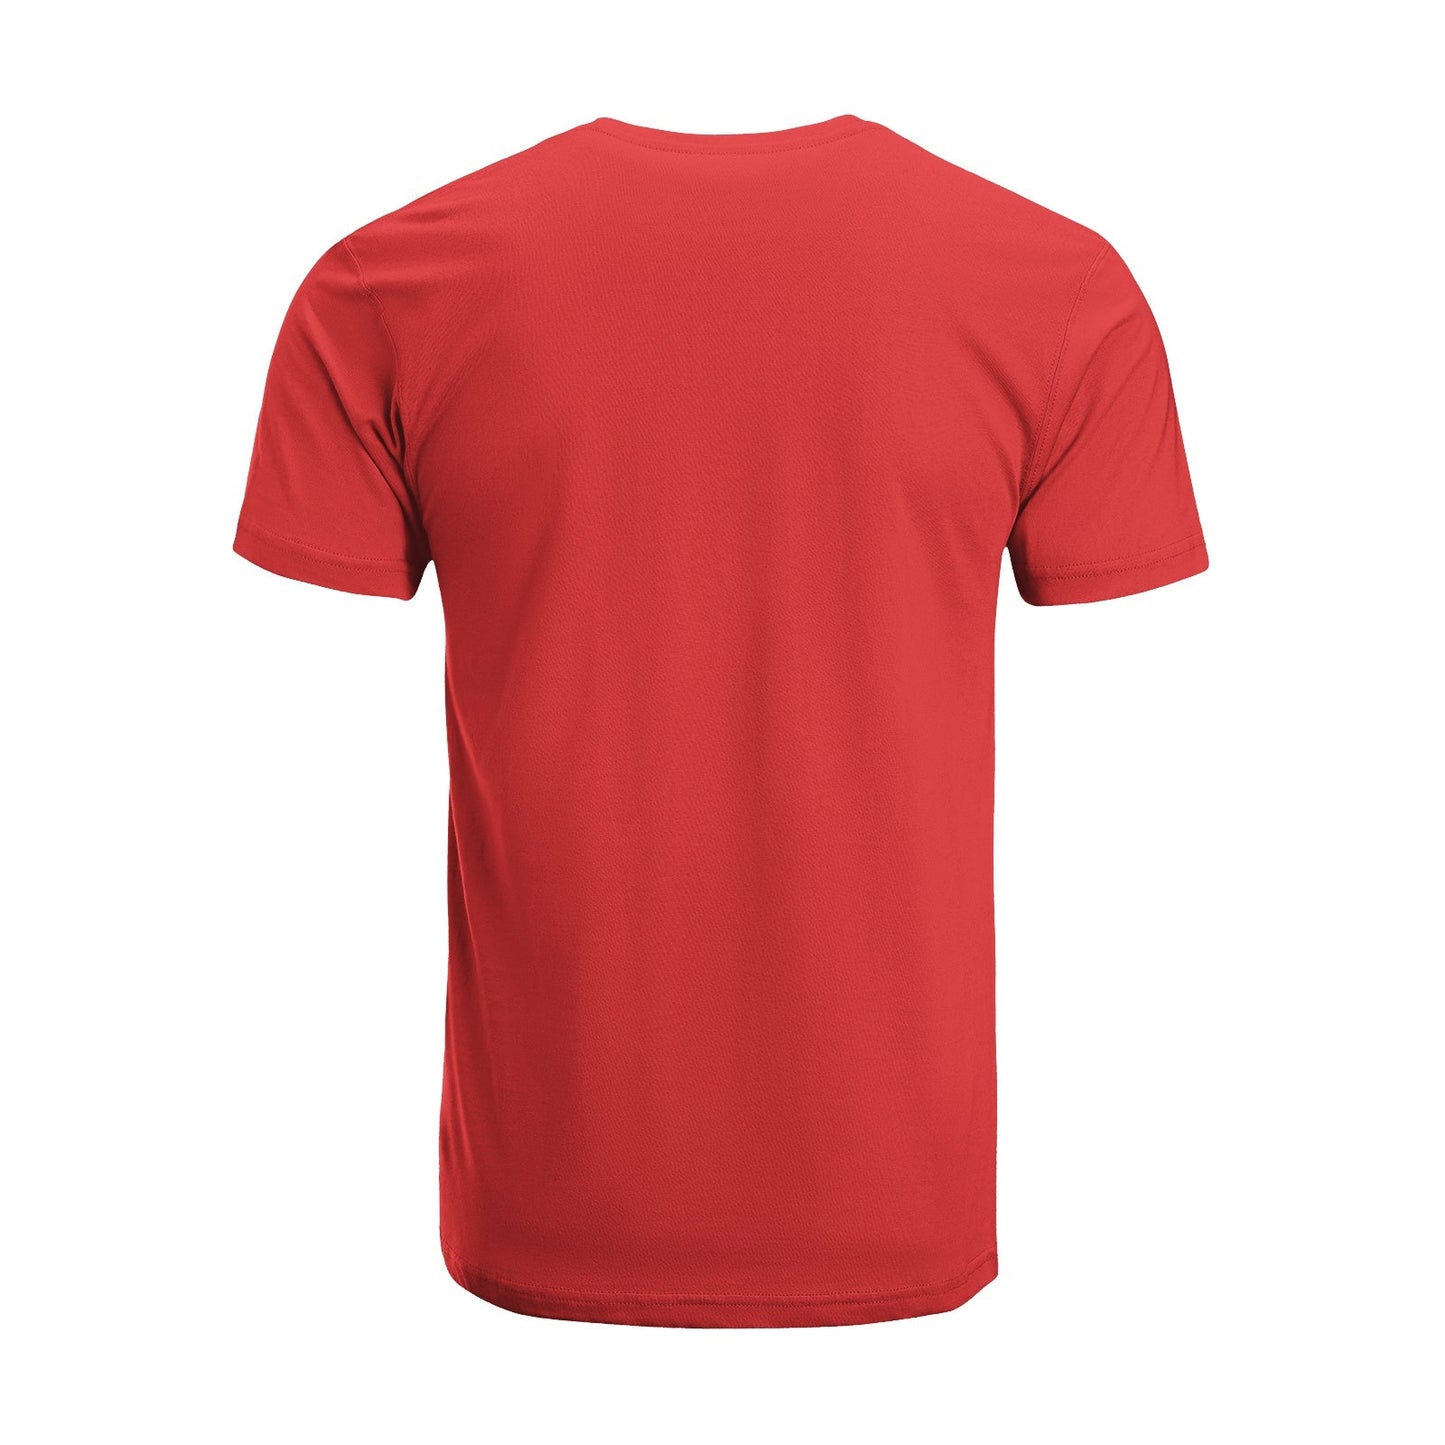 Unisex Short Sleeve Crew Neck Cotton Jersey T-Shirt MOM 31